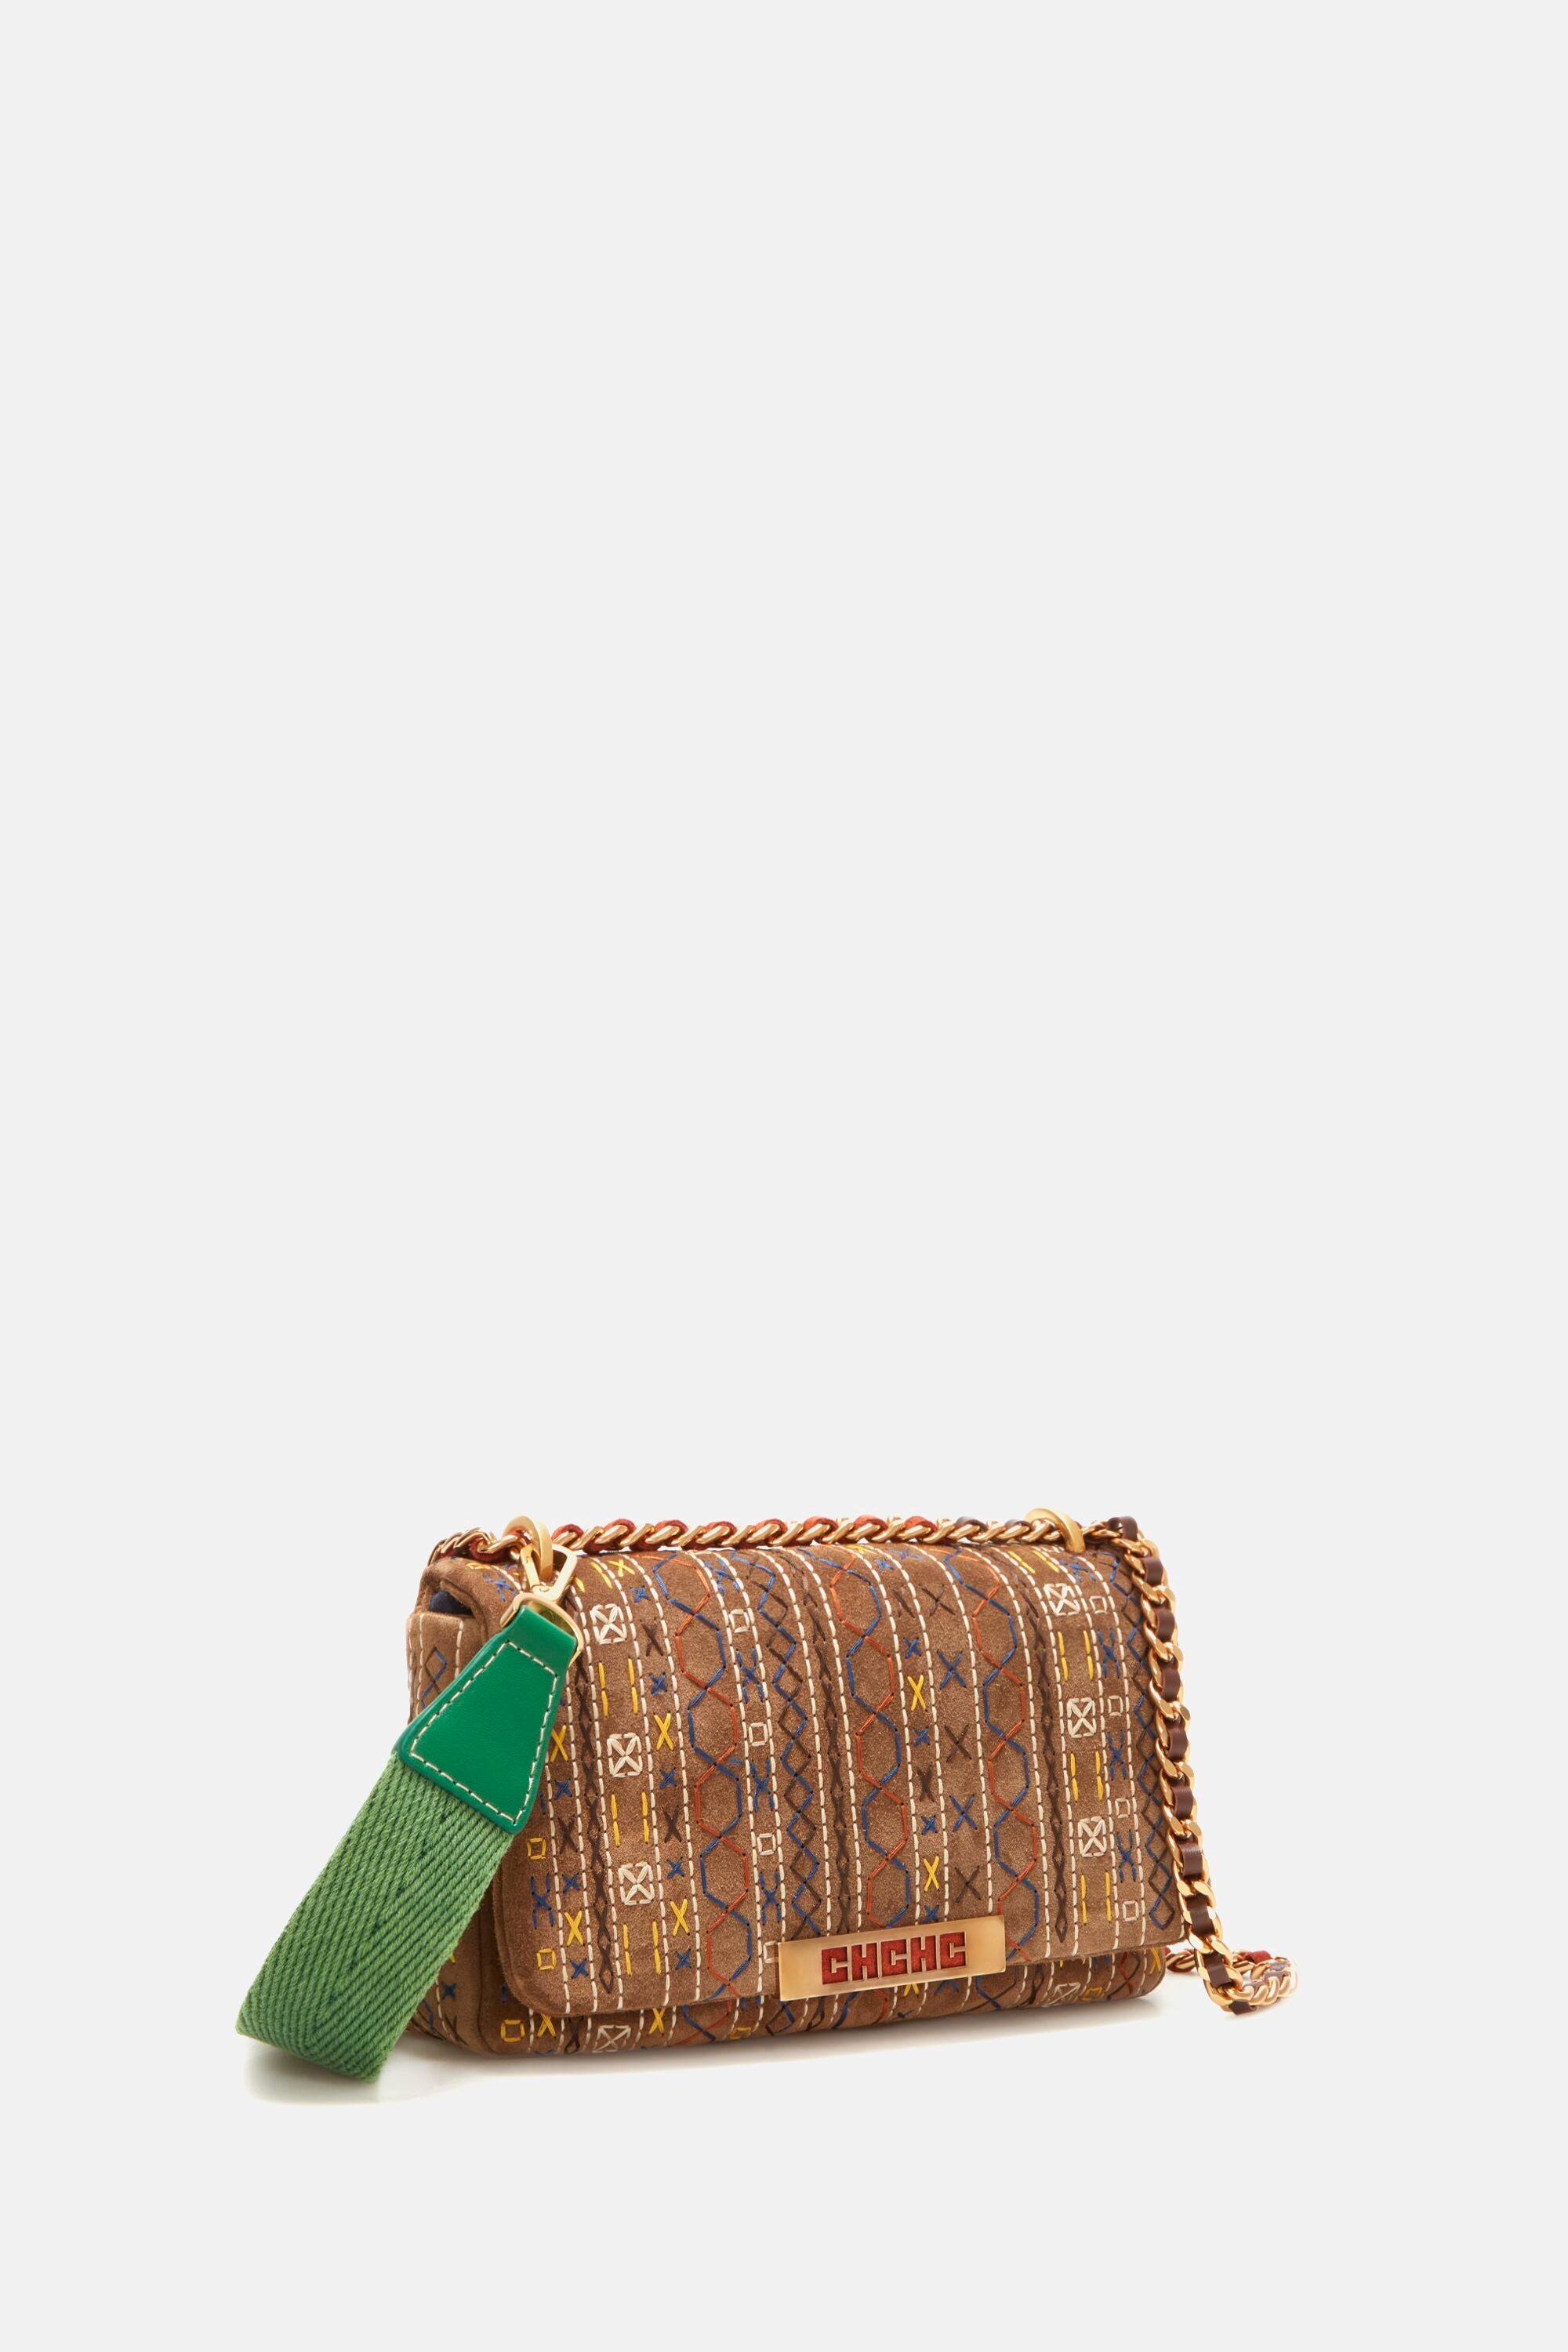 Bimba  Small shoulder bag brown/multicolour - CH Carolina Herrera Germany